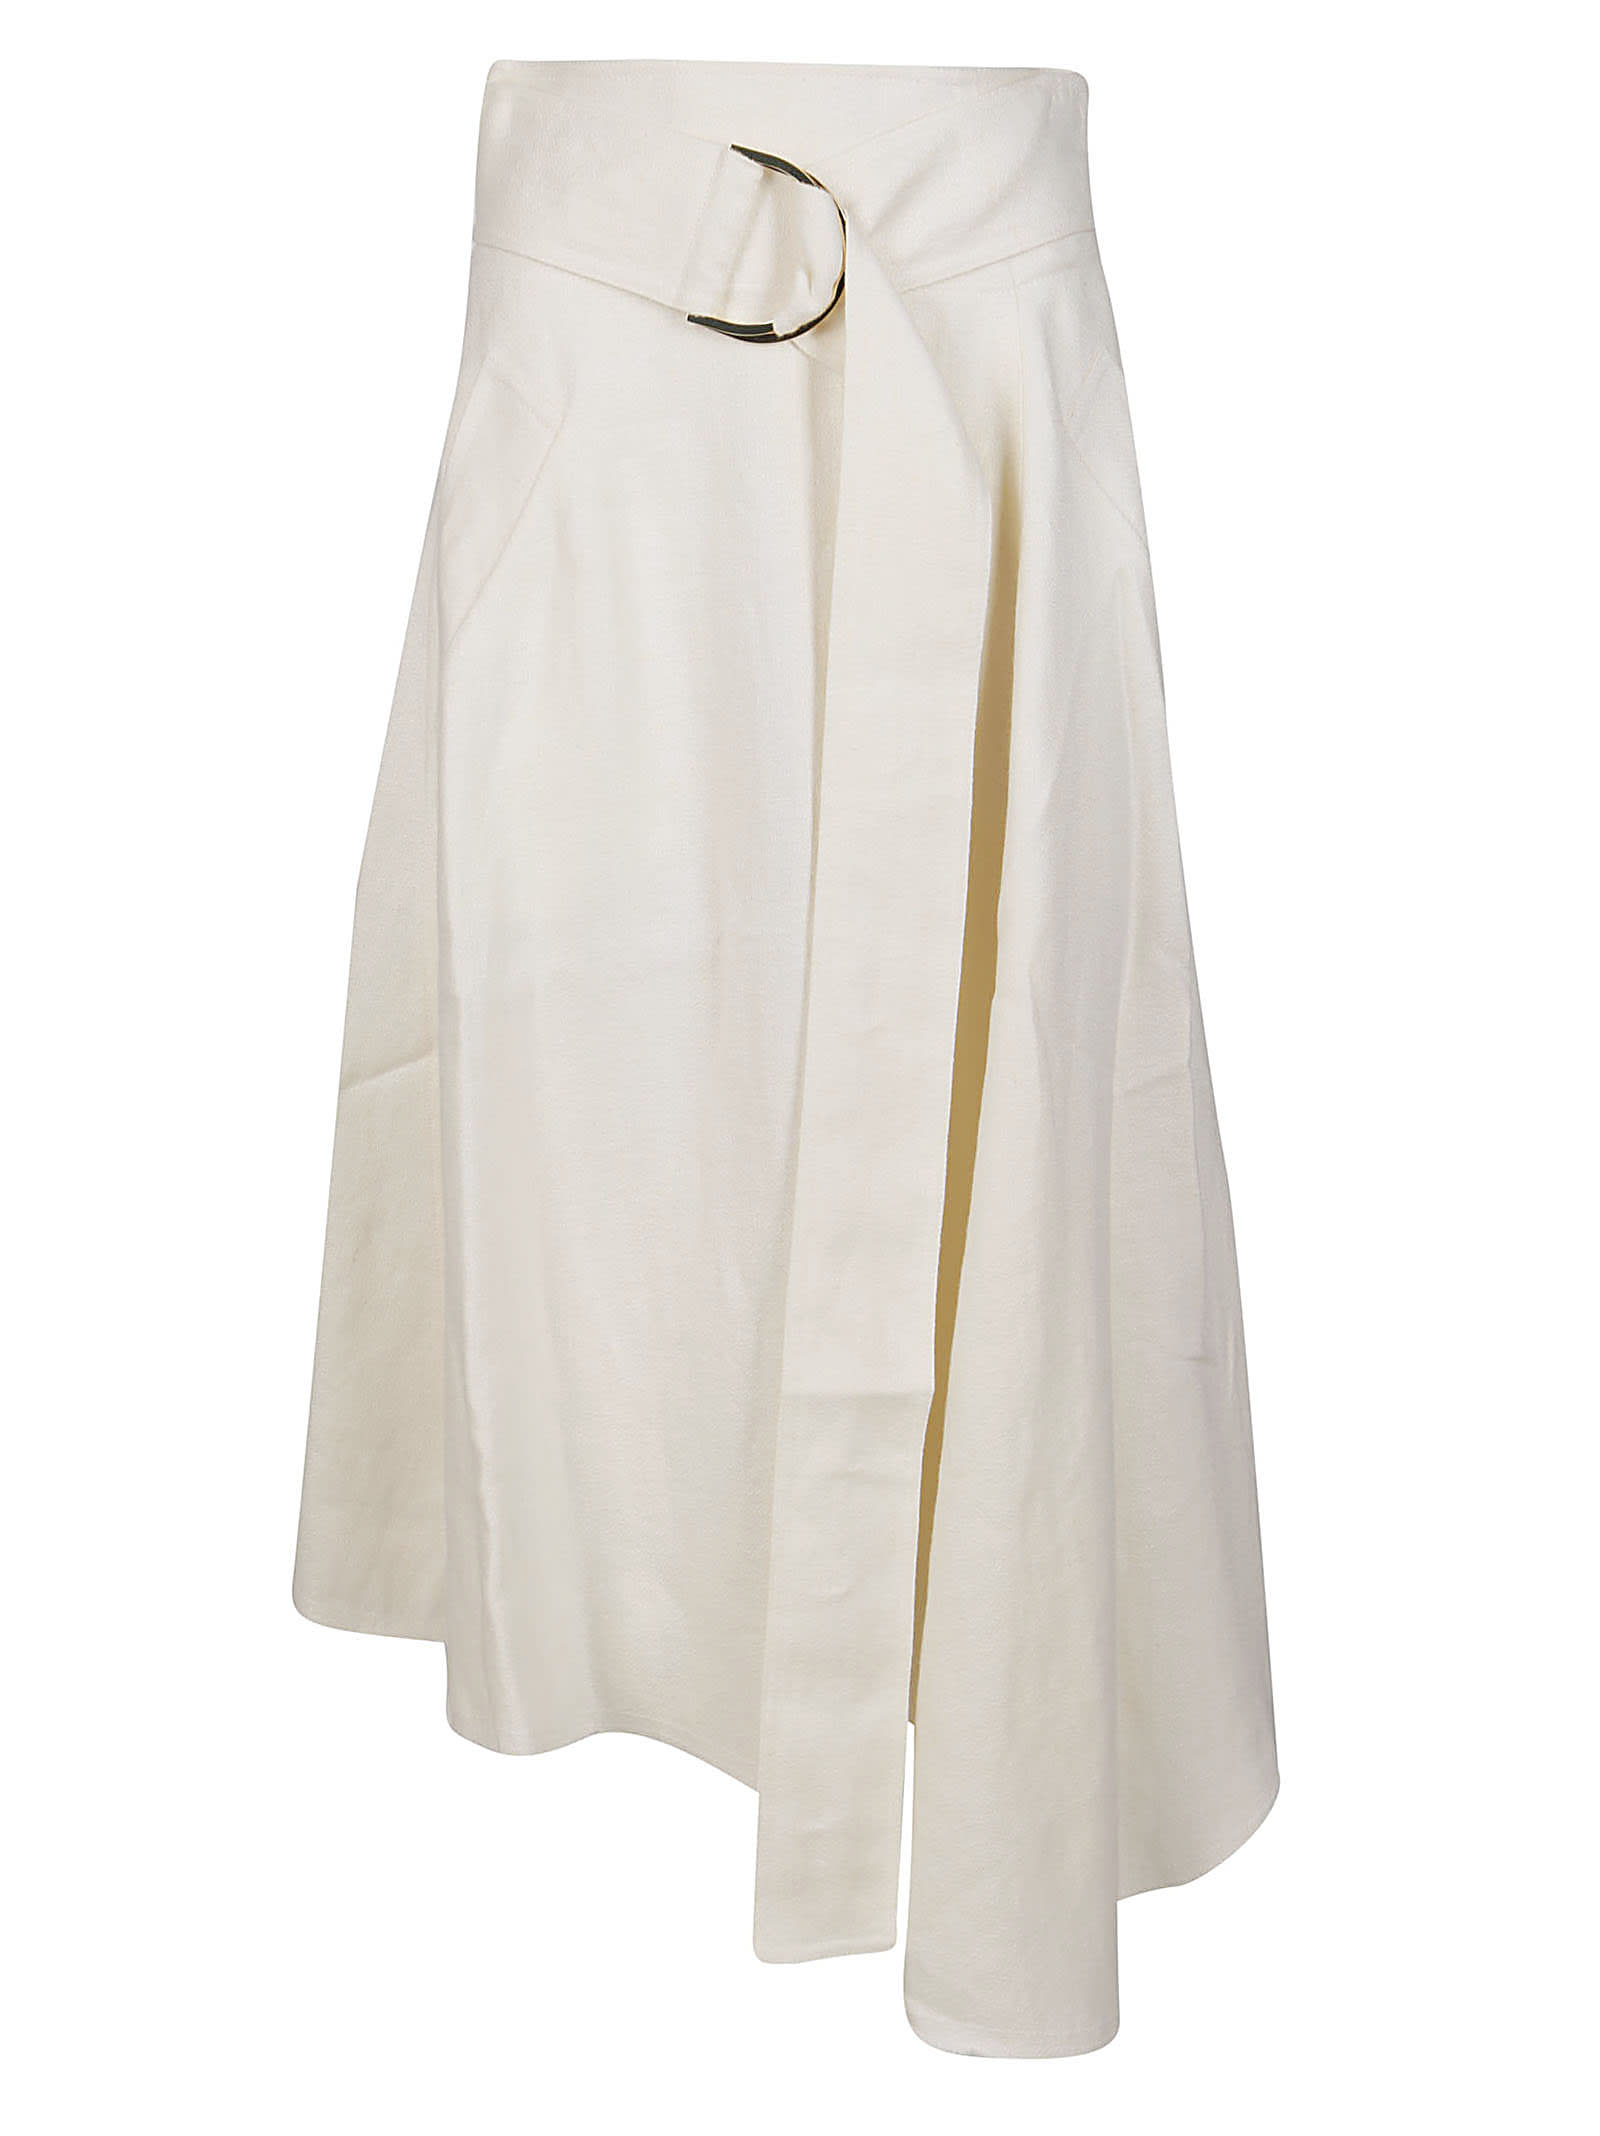 J.W. Anderson Ivory Linen Skirt